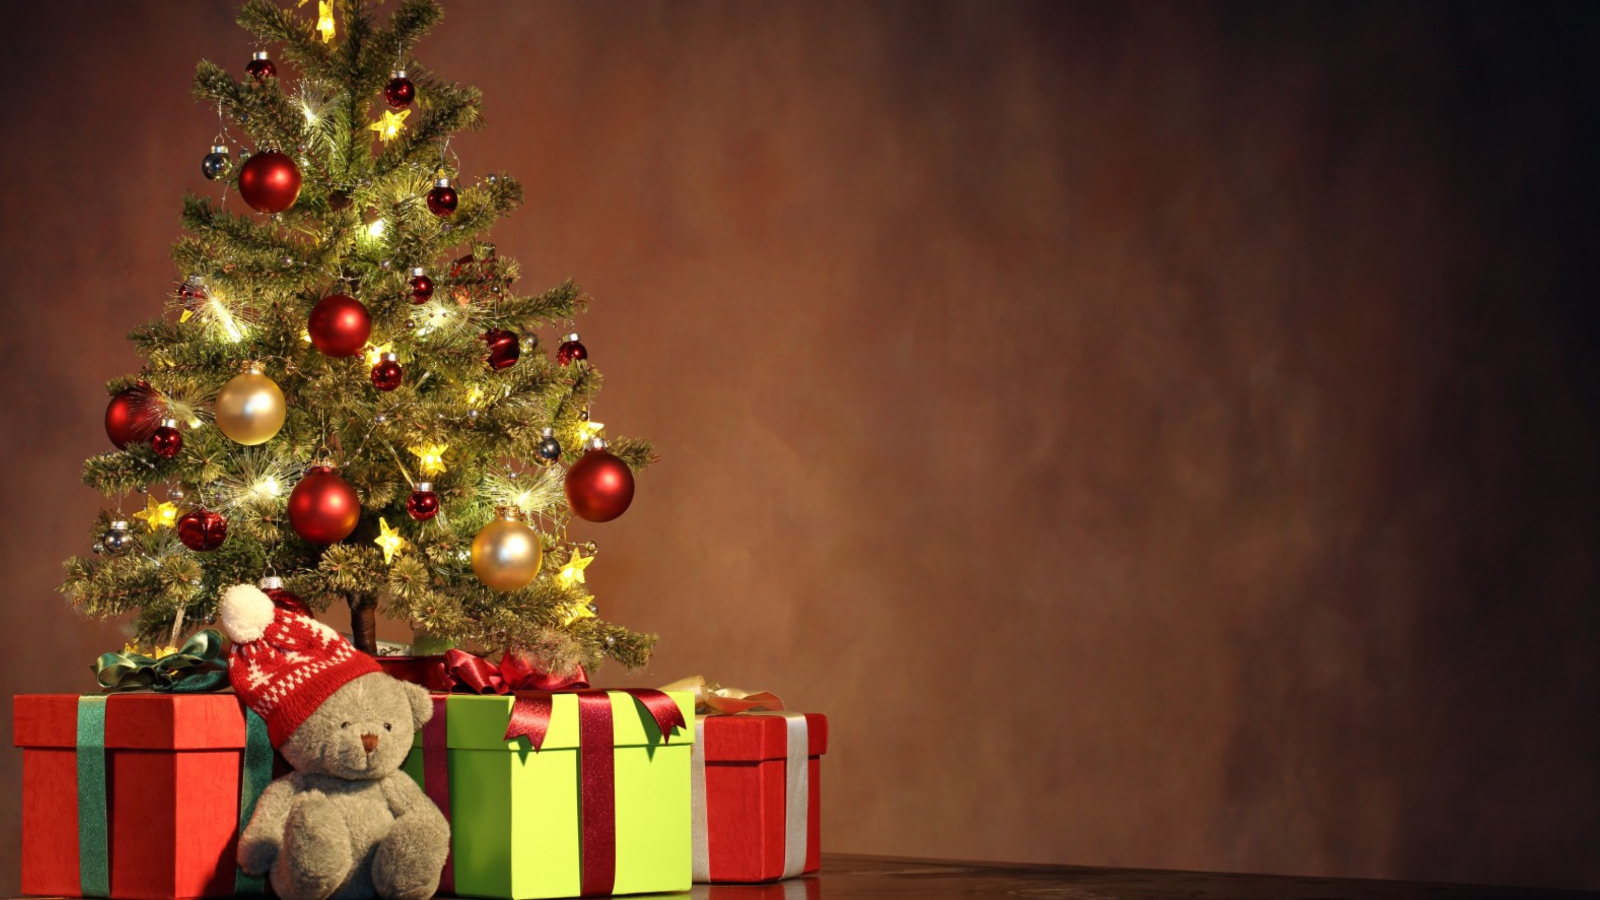 Das Christmas Presents Under Christmas Tree Wallpaper 1600x900